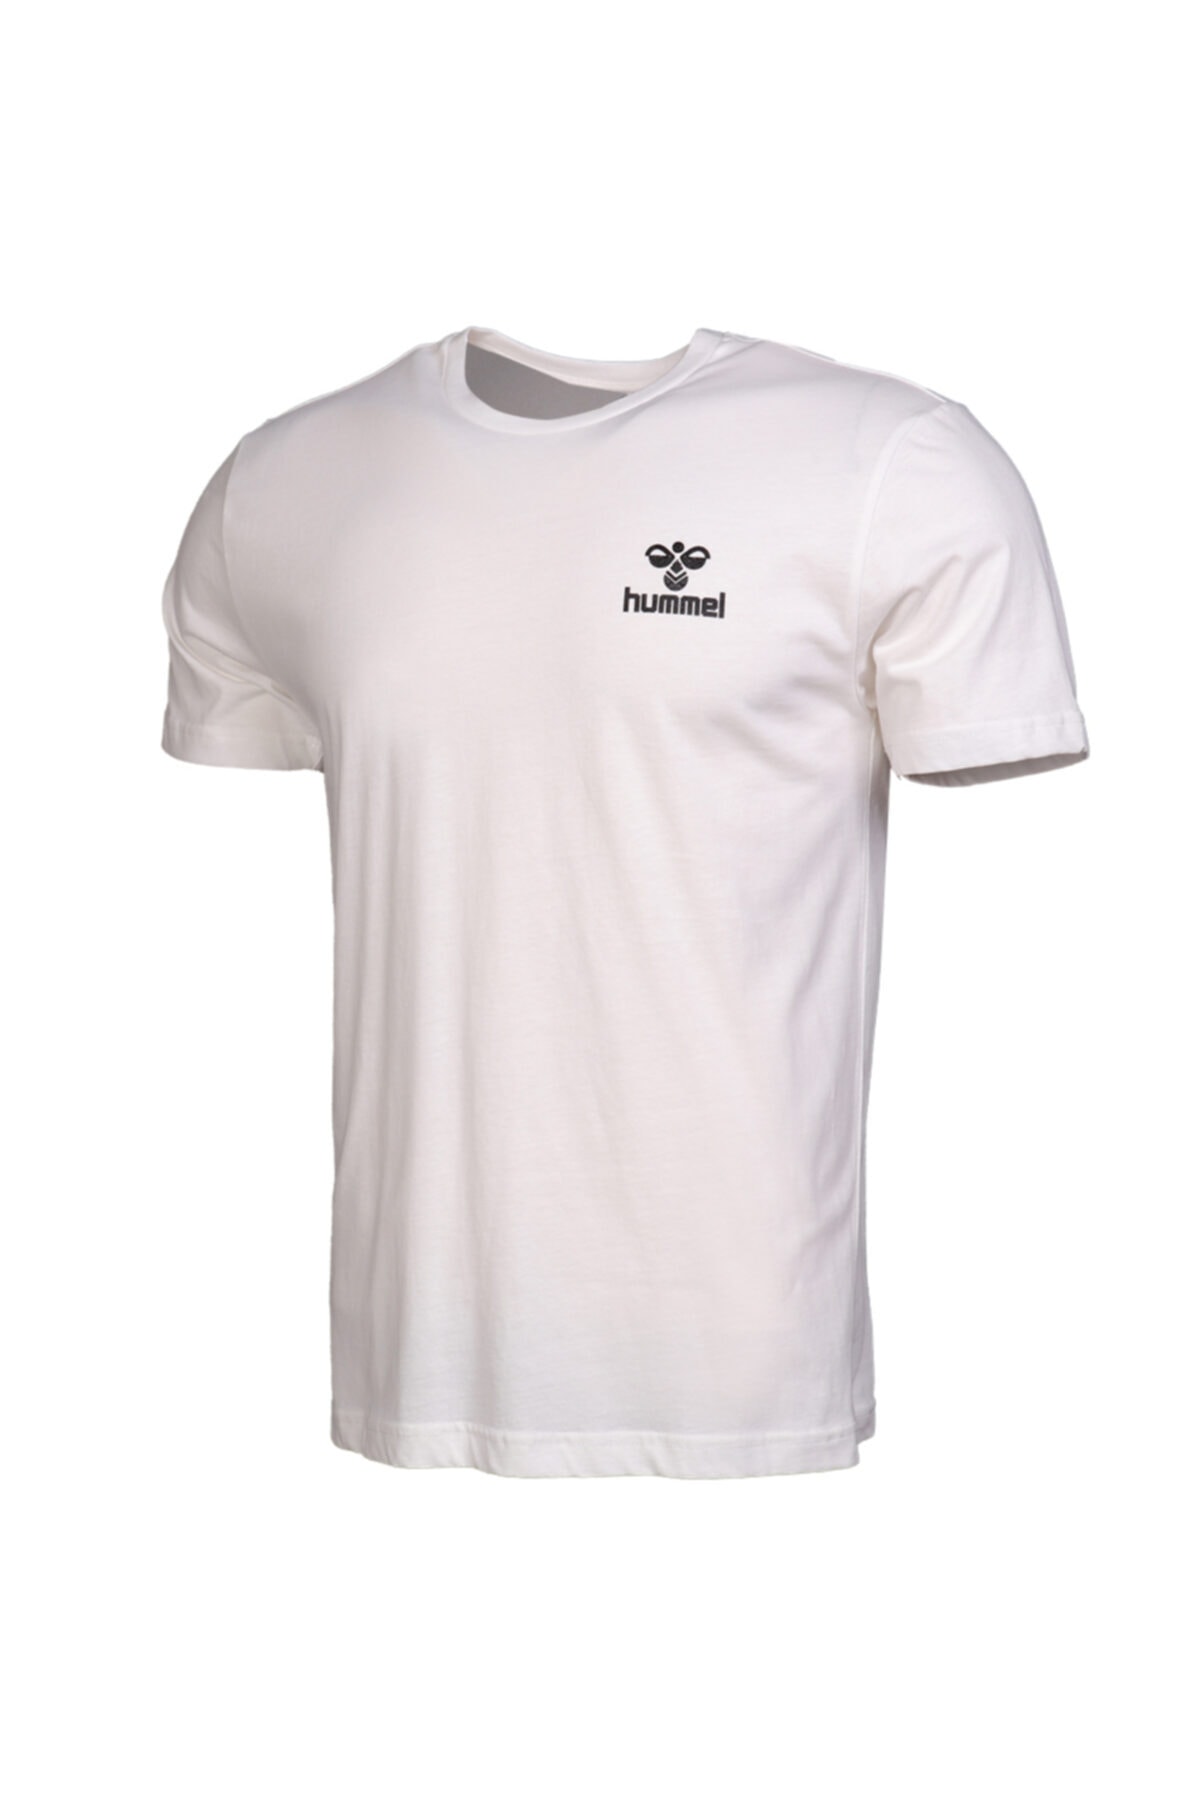 HUMMEL Sports T-Shirt - White - Regular fit